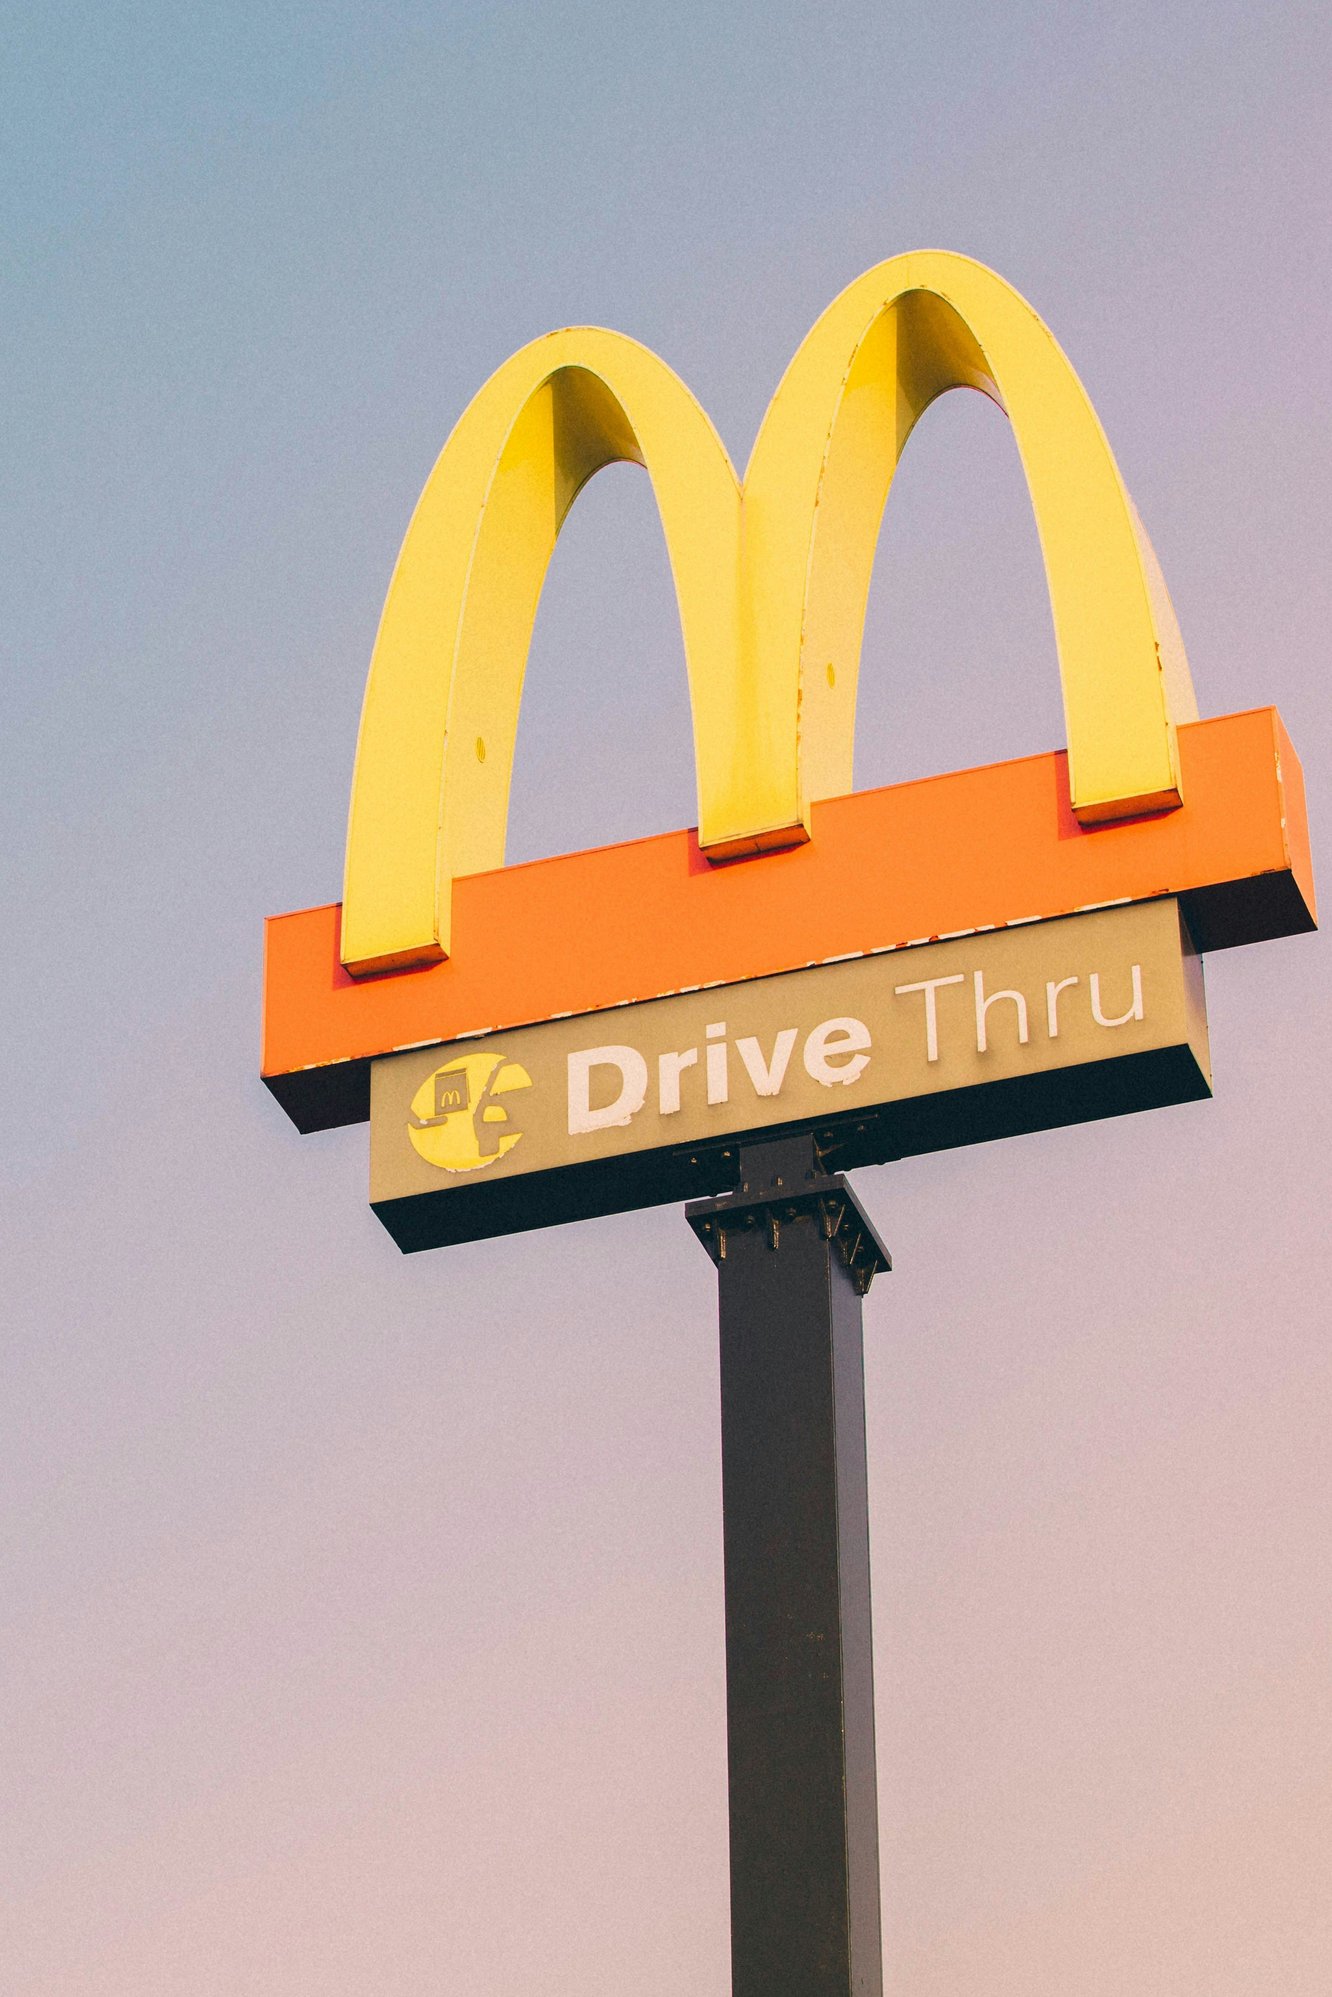 McDonalds Drive Thru sign